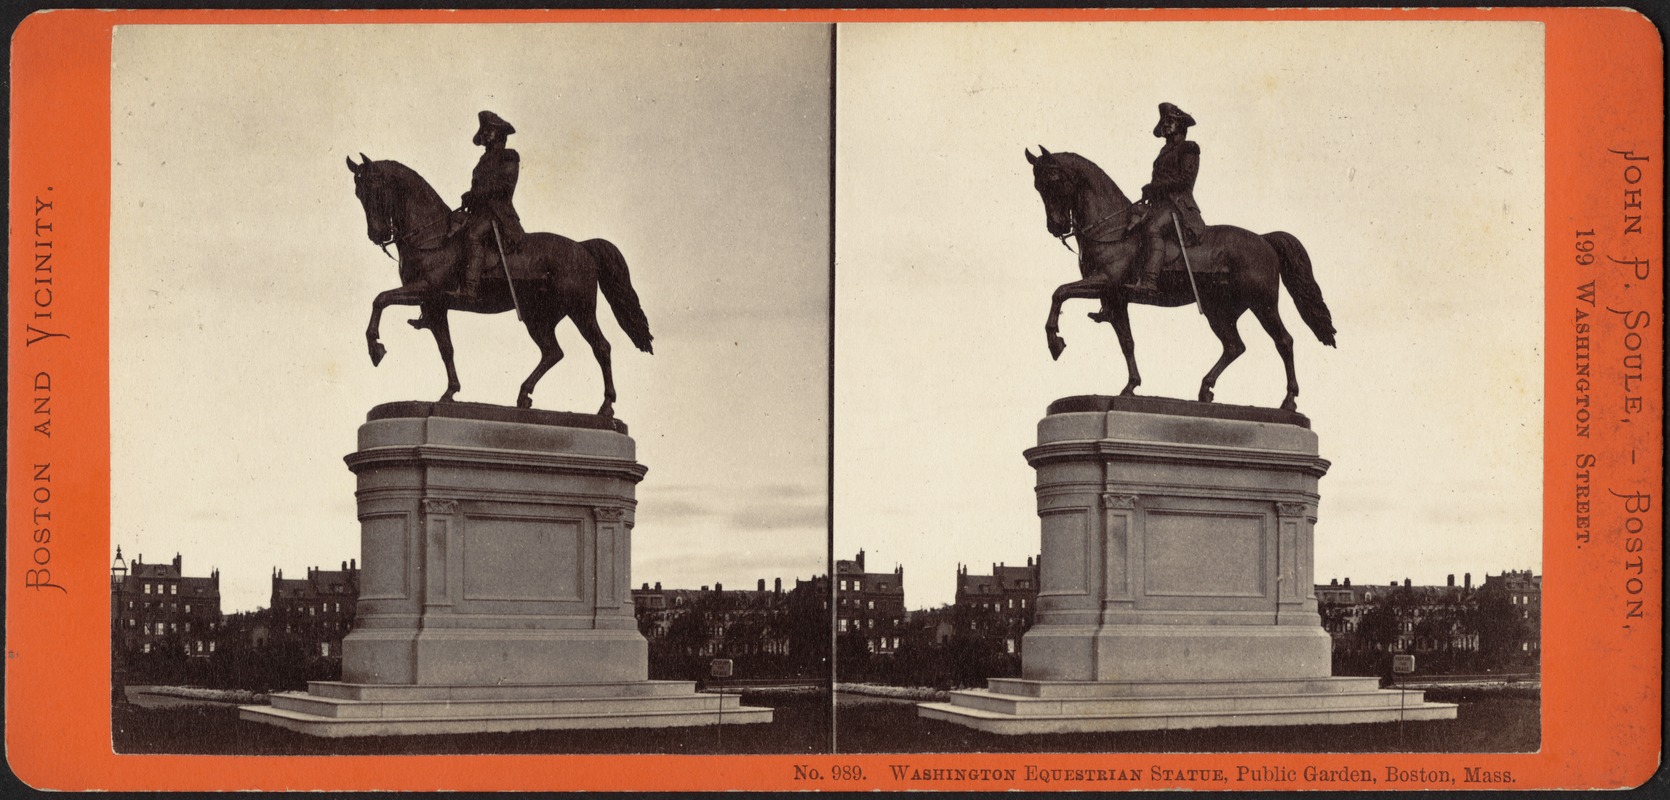 Washington equestrian statue, Public Garden, Boston, Mass.